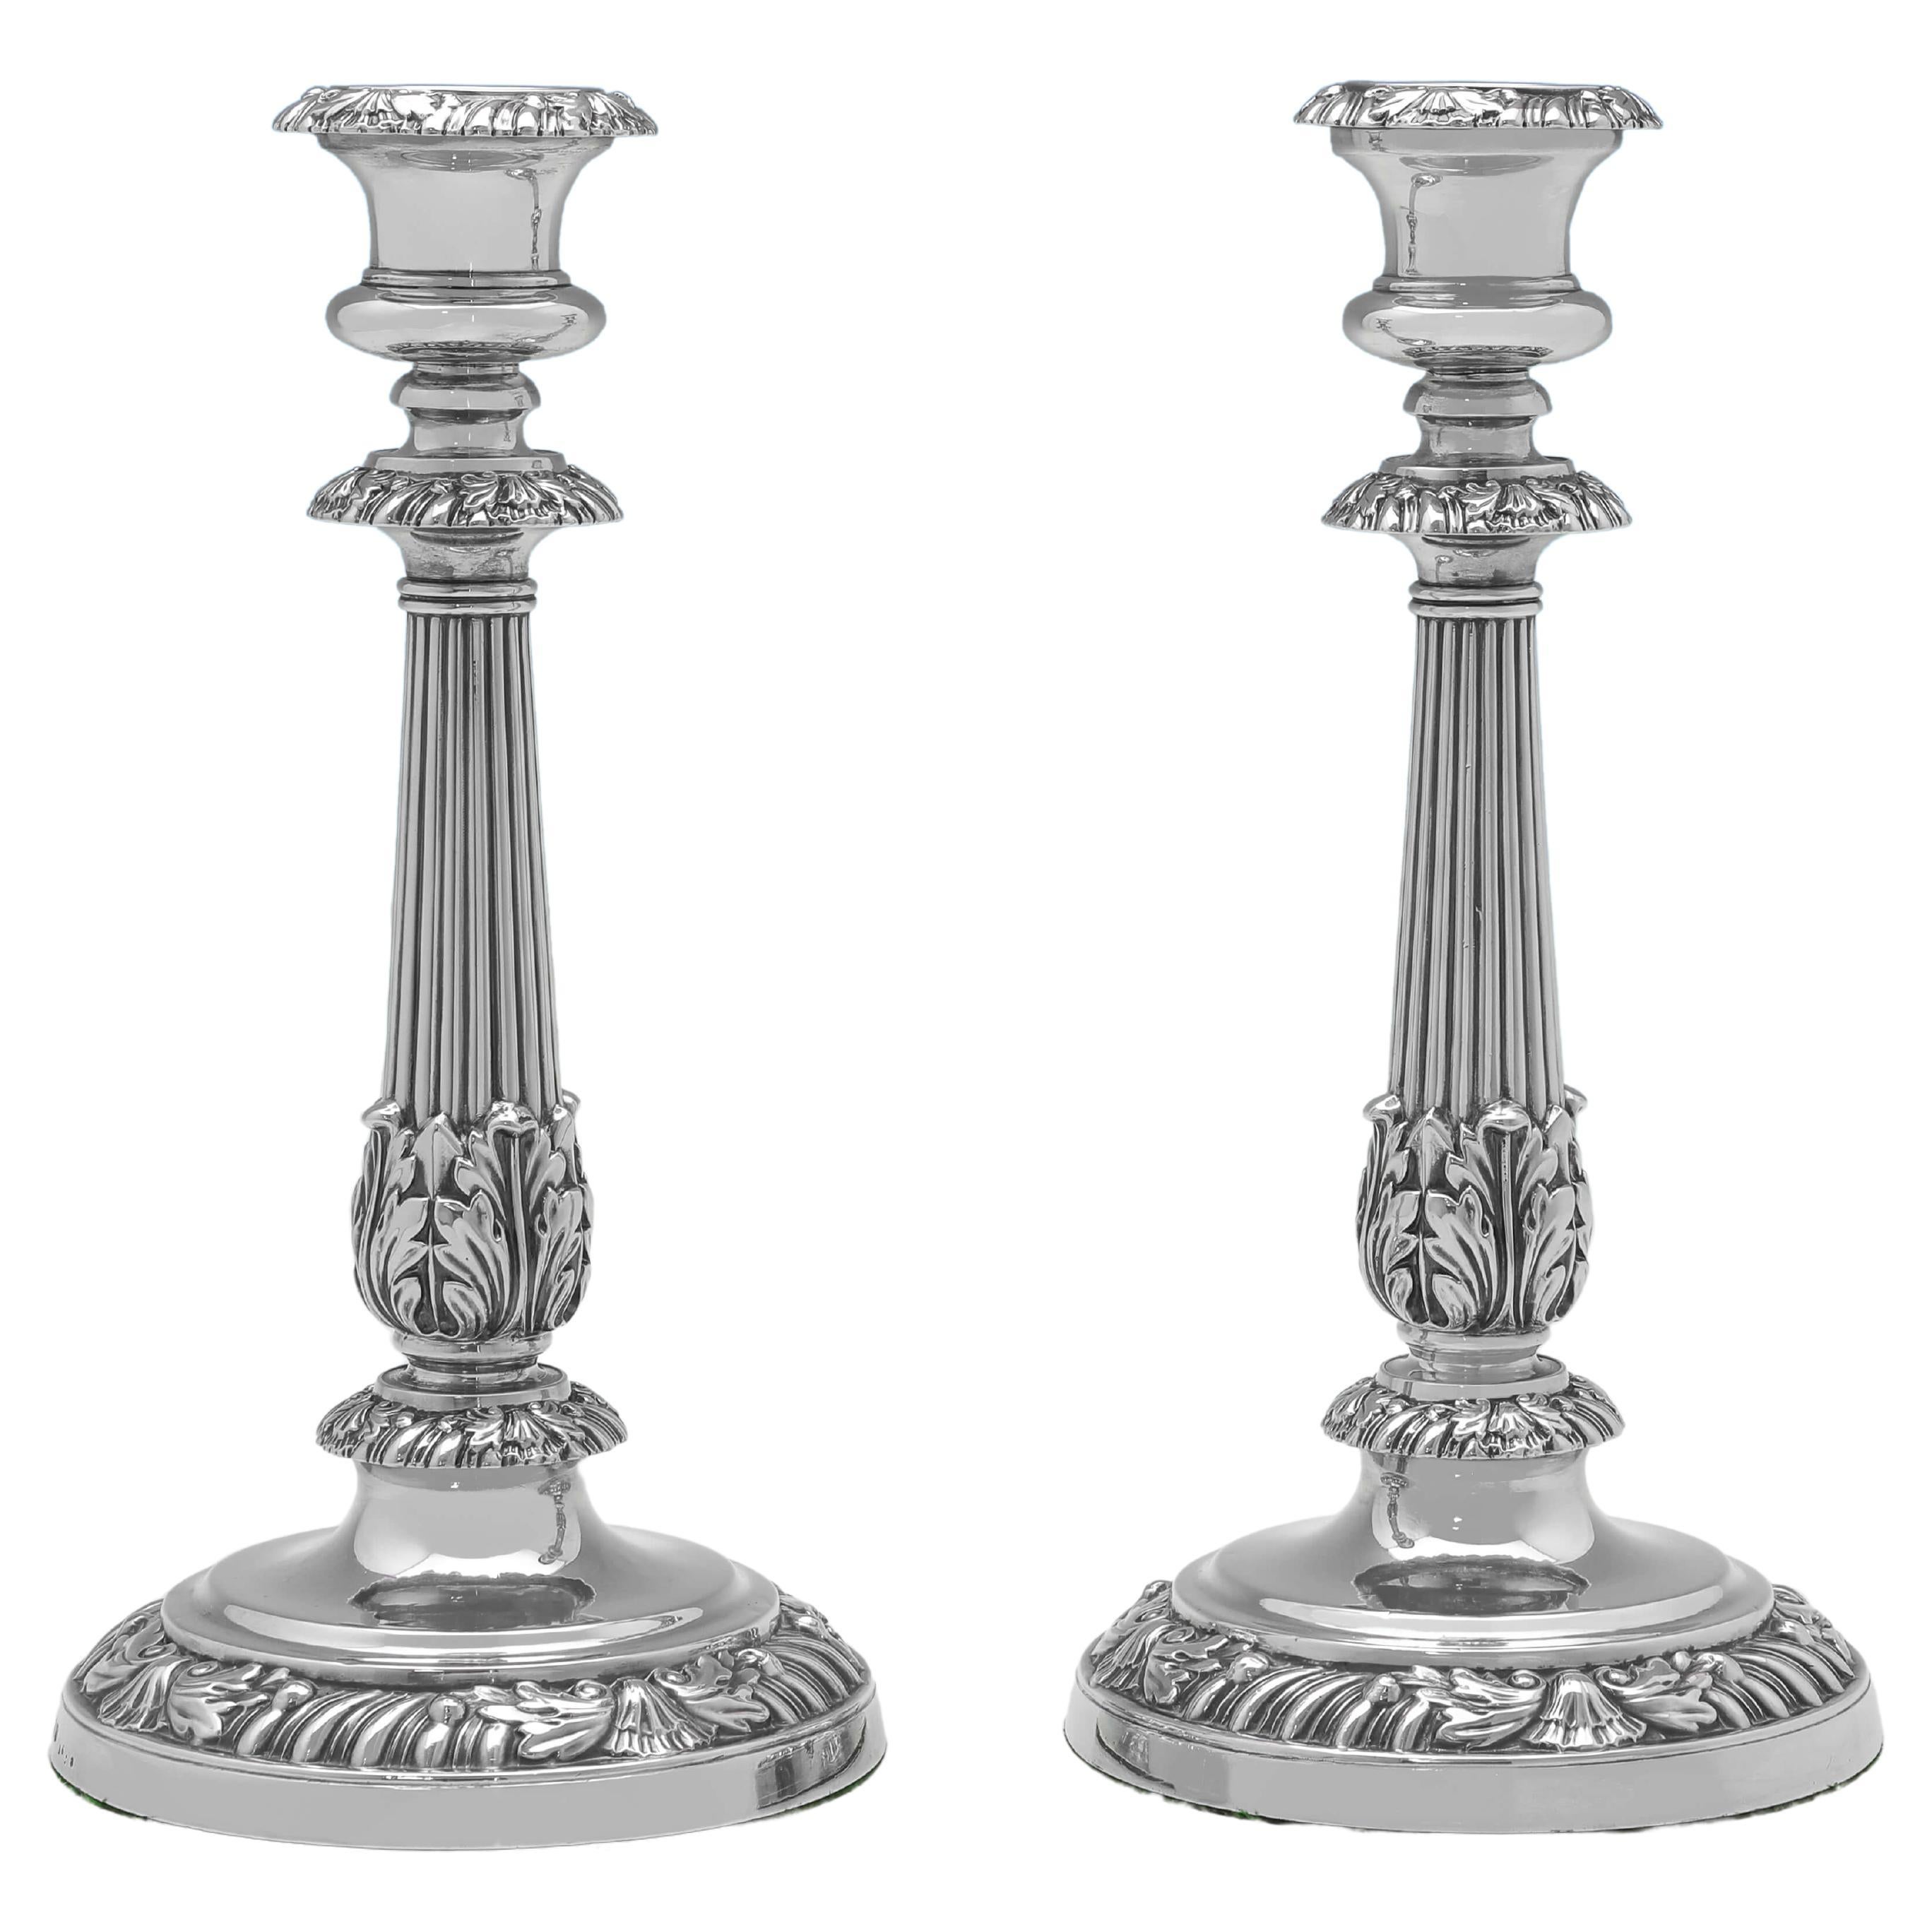 Matthew Boulton, Regency Design Antique Sterling Silver Candlesticks, 1821